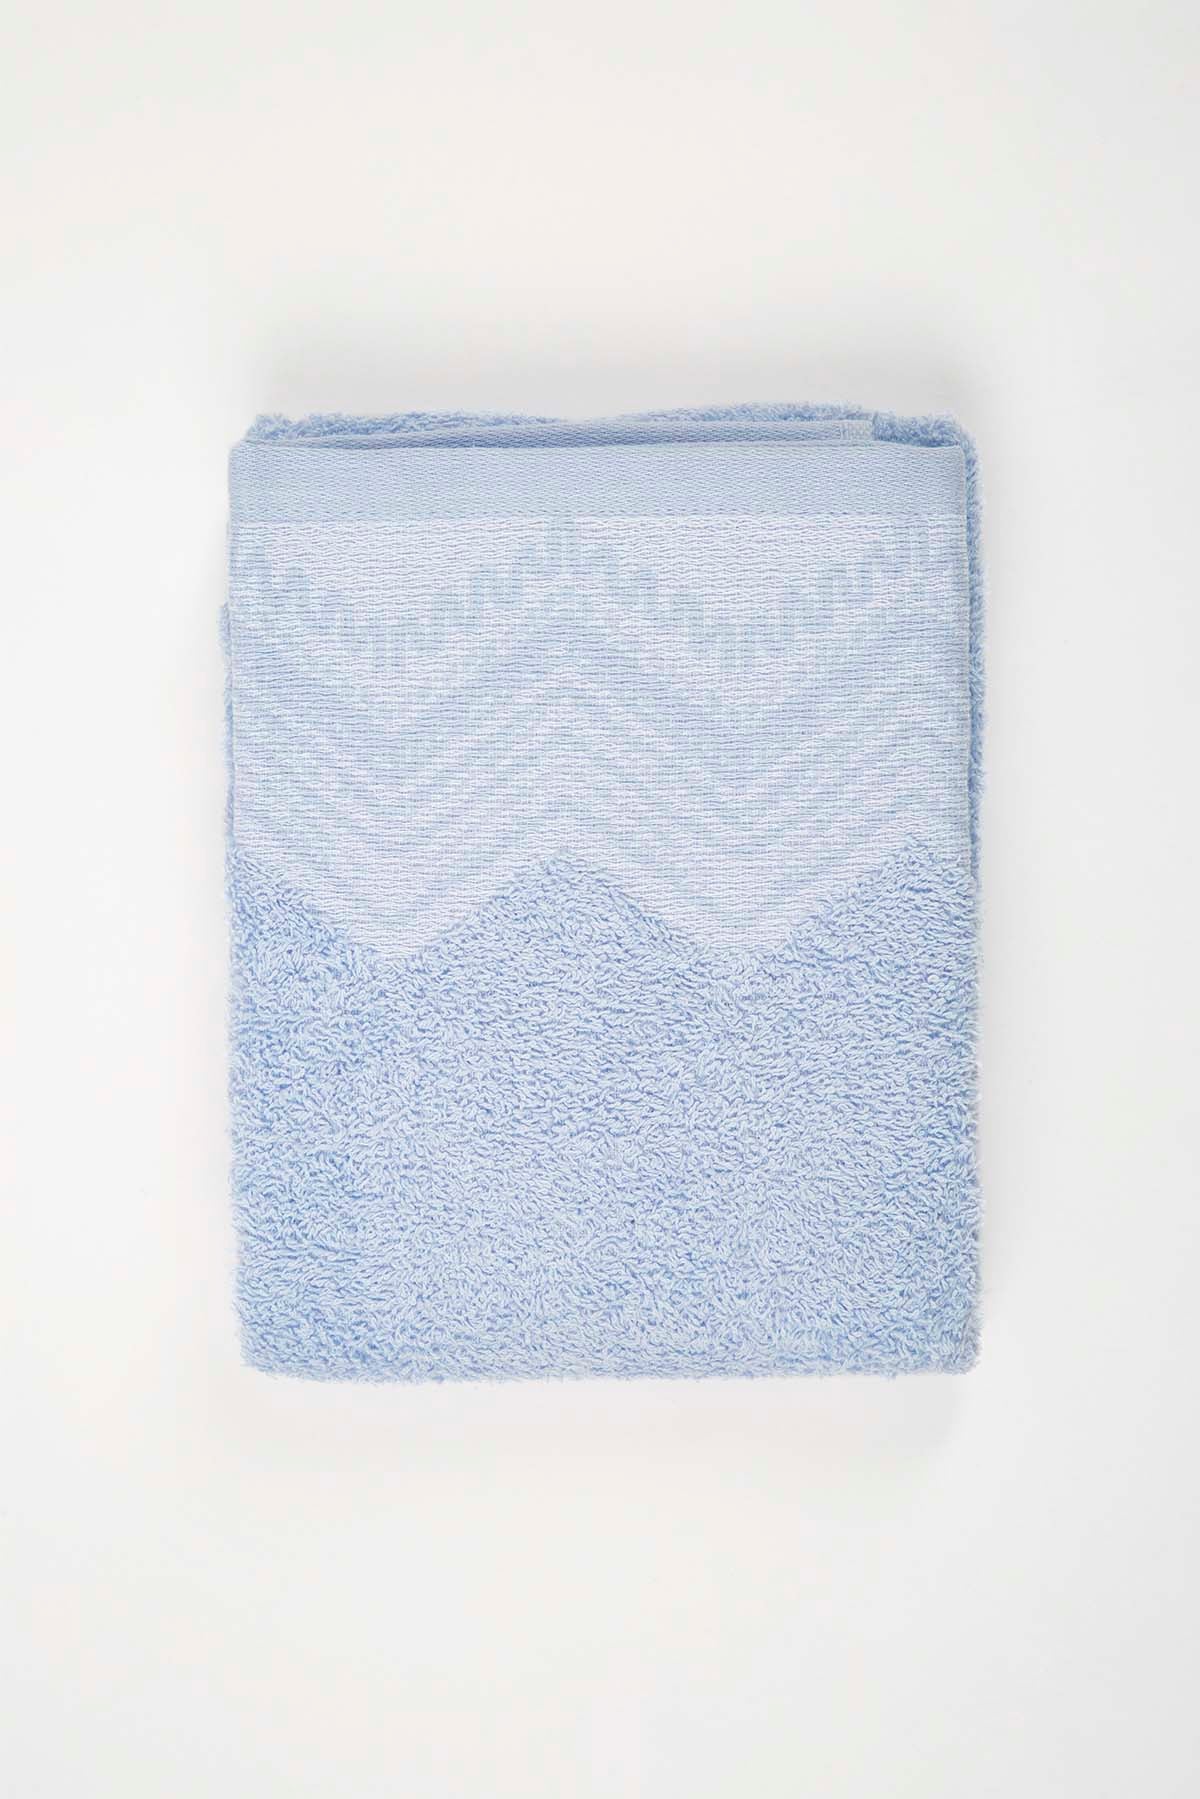 New Leron Towel Set